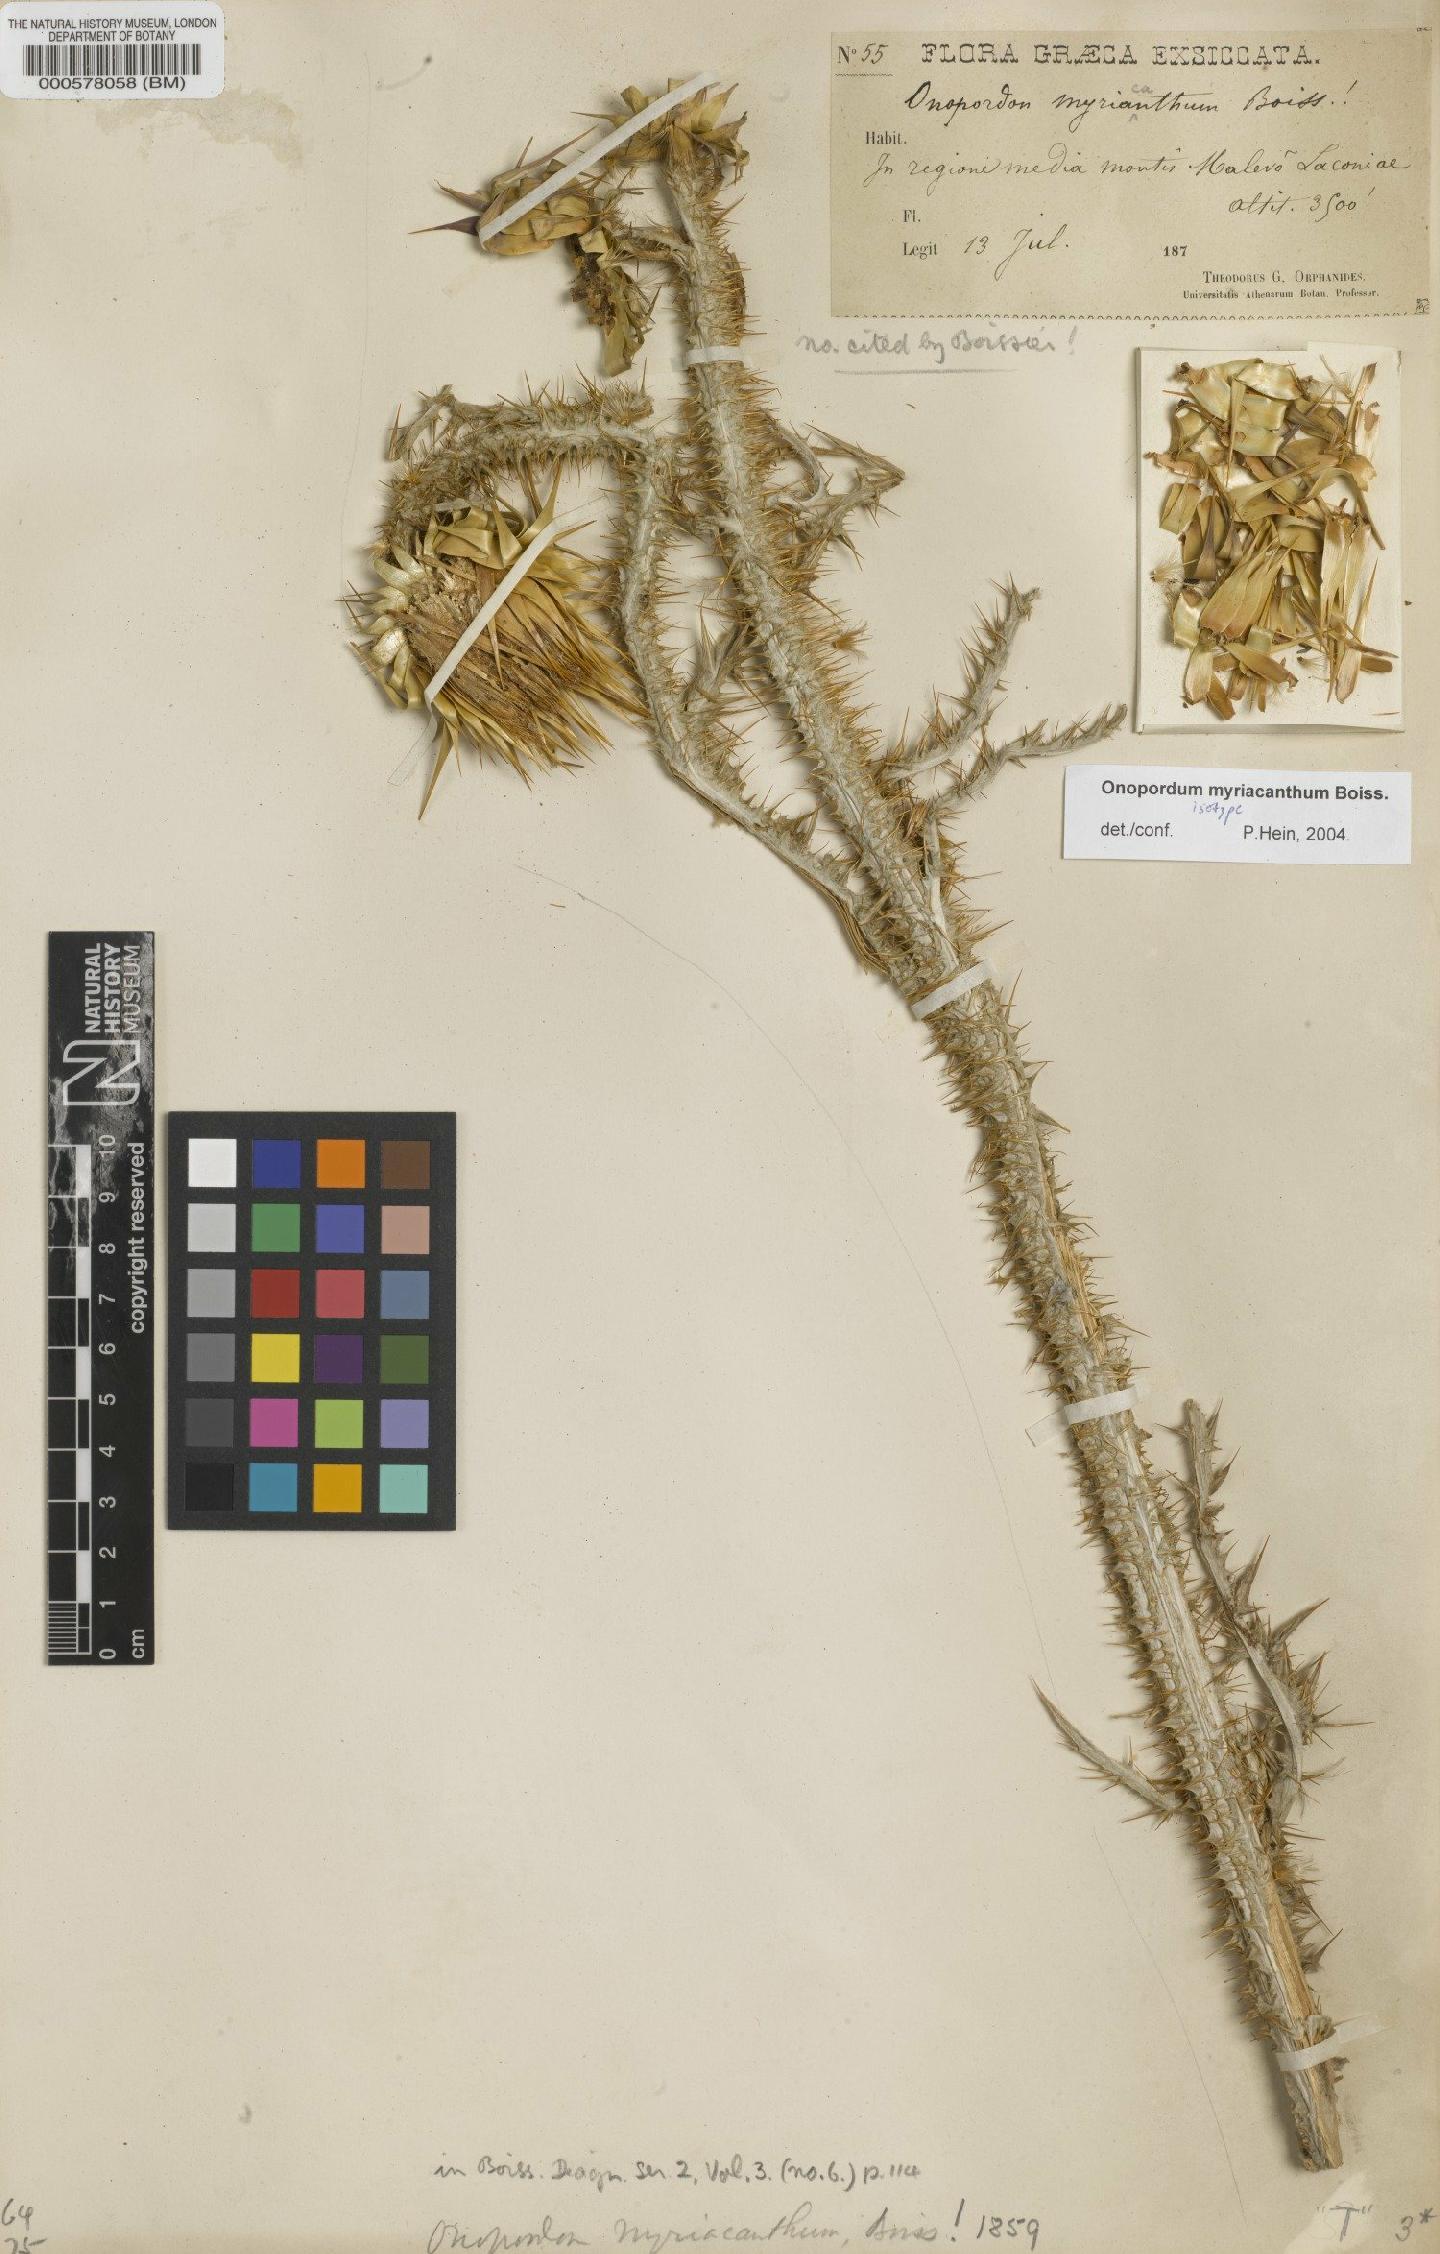 To NHMUK collection (Onopordum bracteatum subsp. myriacanthum (Boiss.) Franco; Type; NHMUK:ecatalogue:4677473)